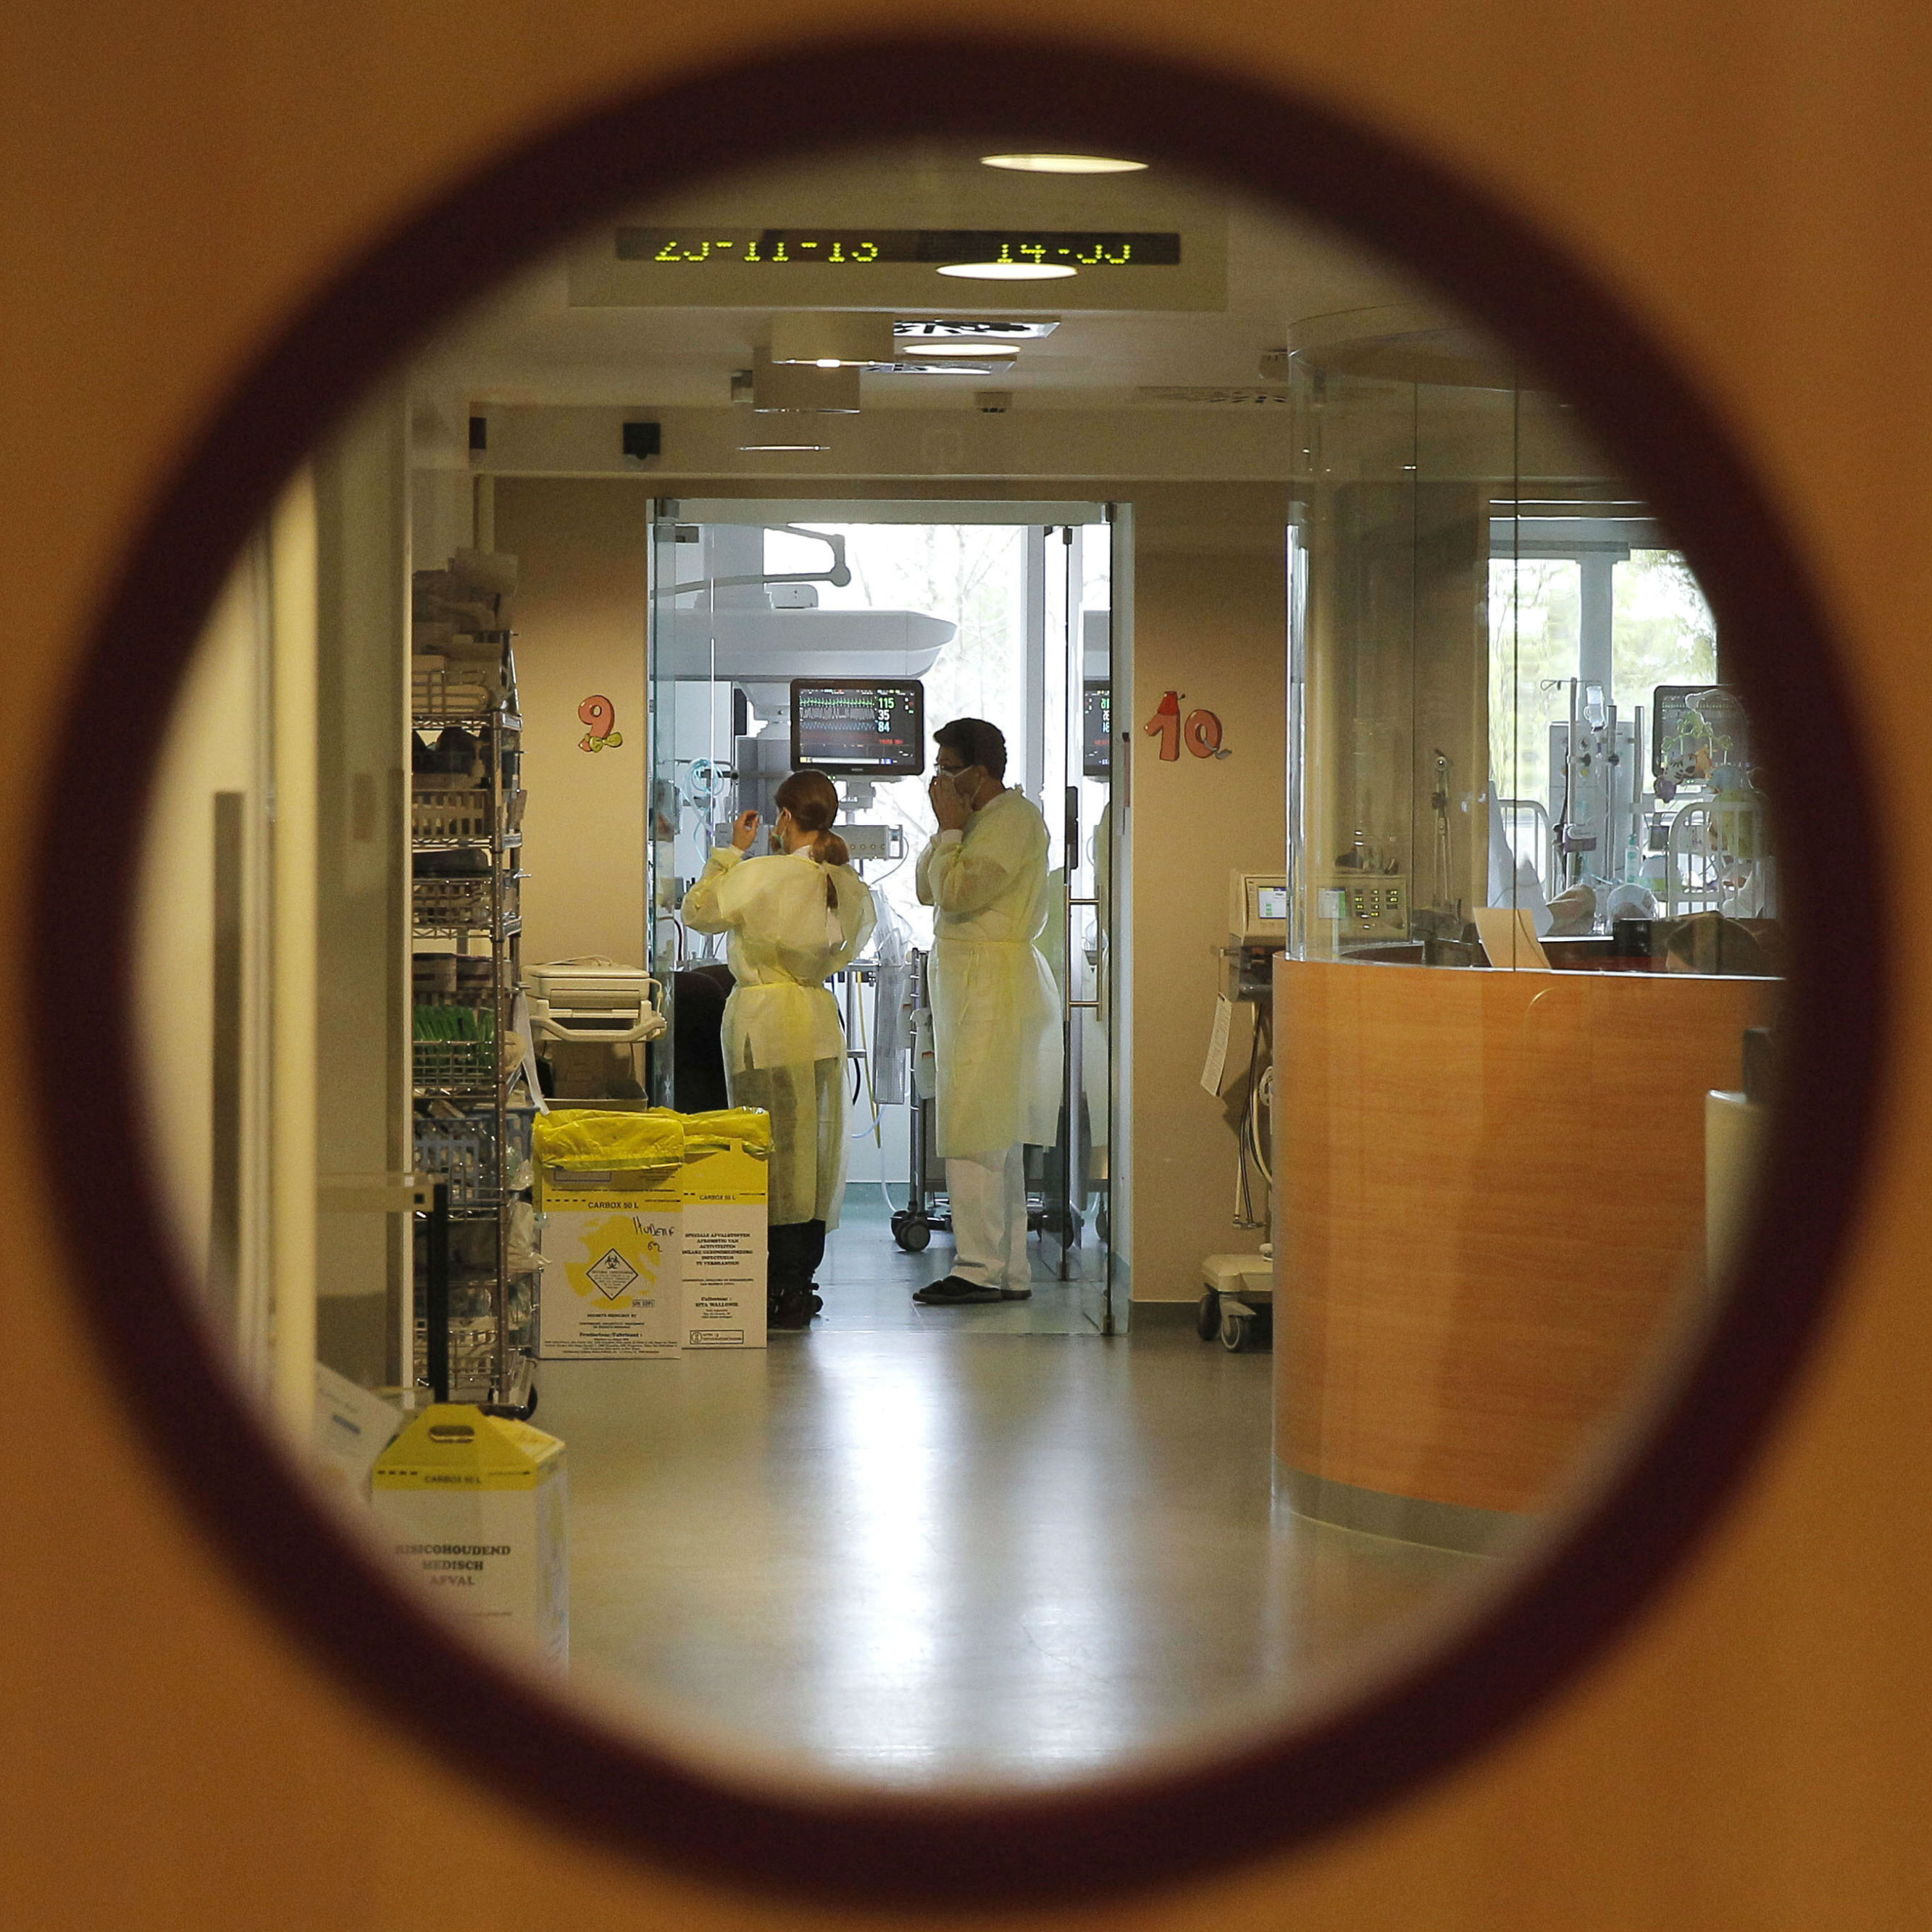 Showdown looms over euthanasia in Belgian psychiatric hospital group